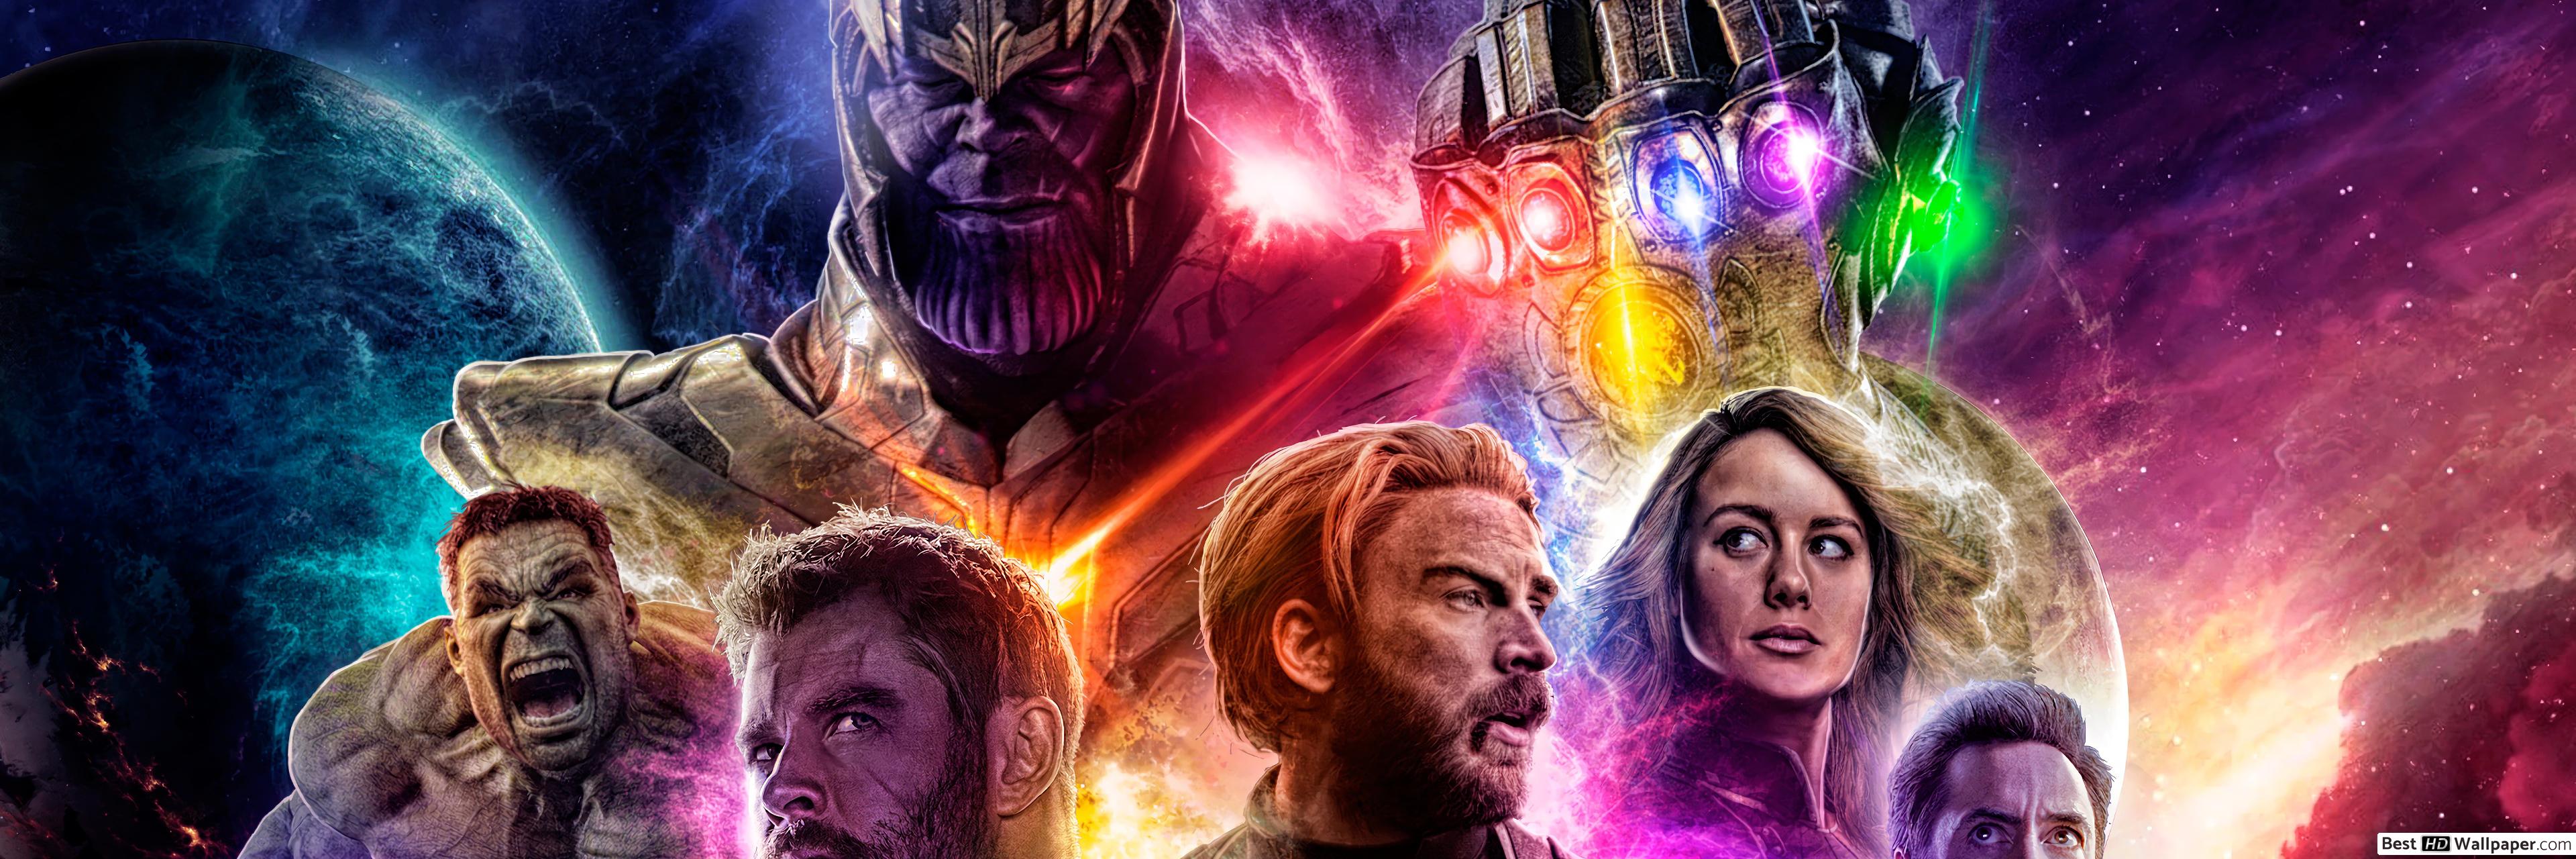 Avengers 4 EndGame HD wallpaper download